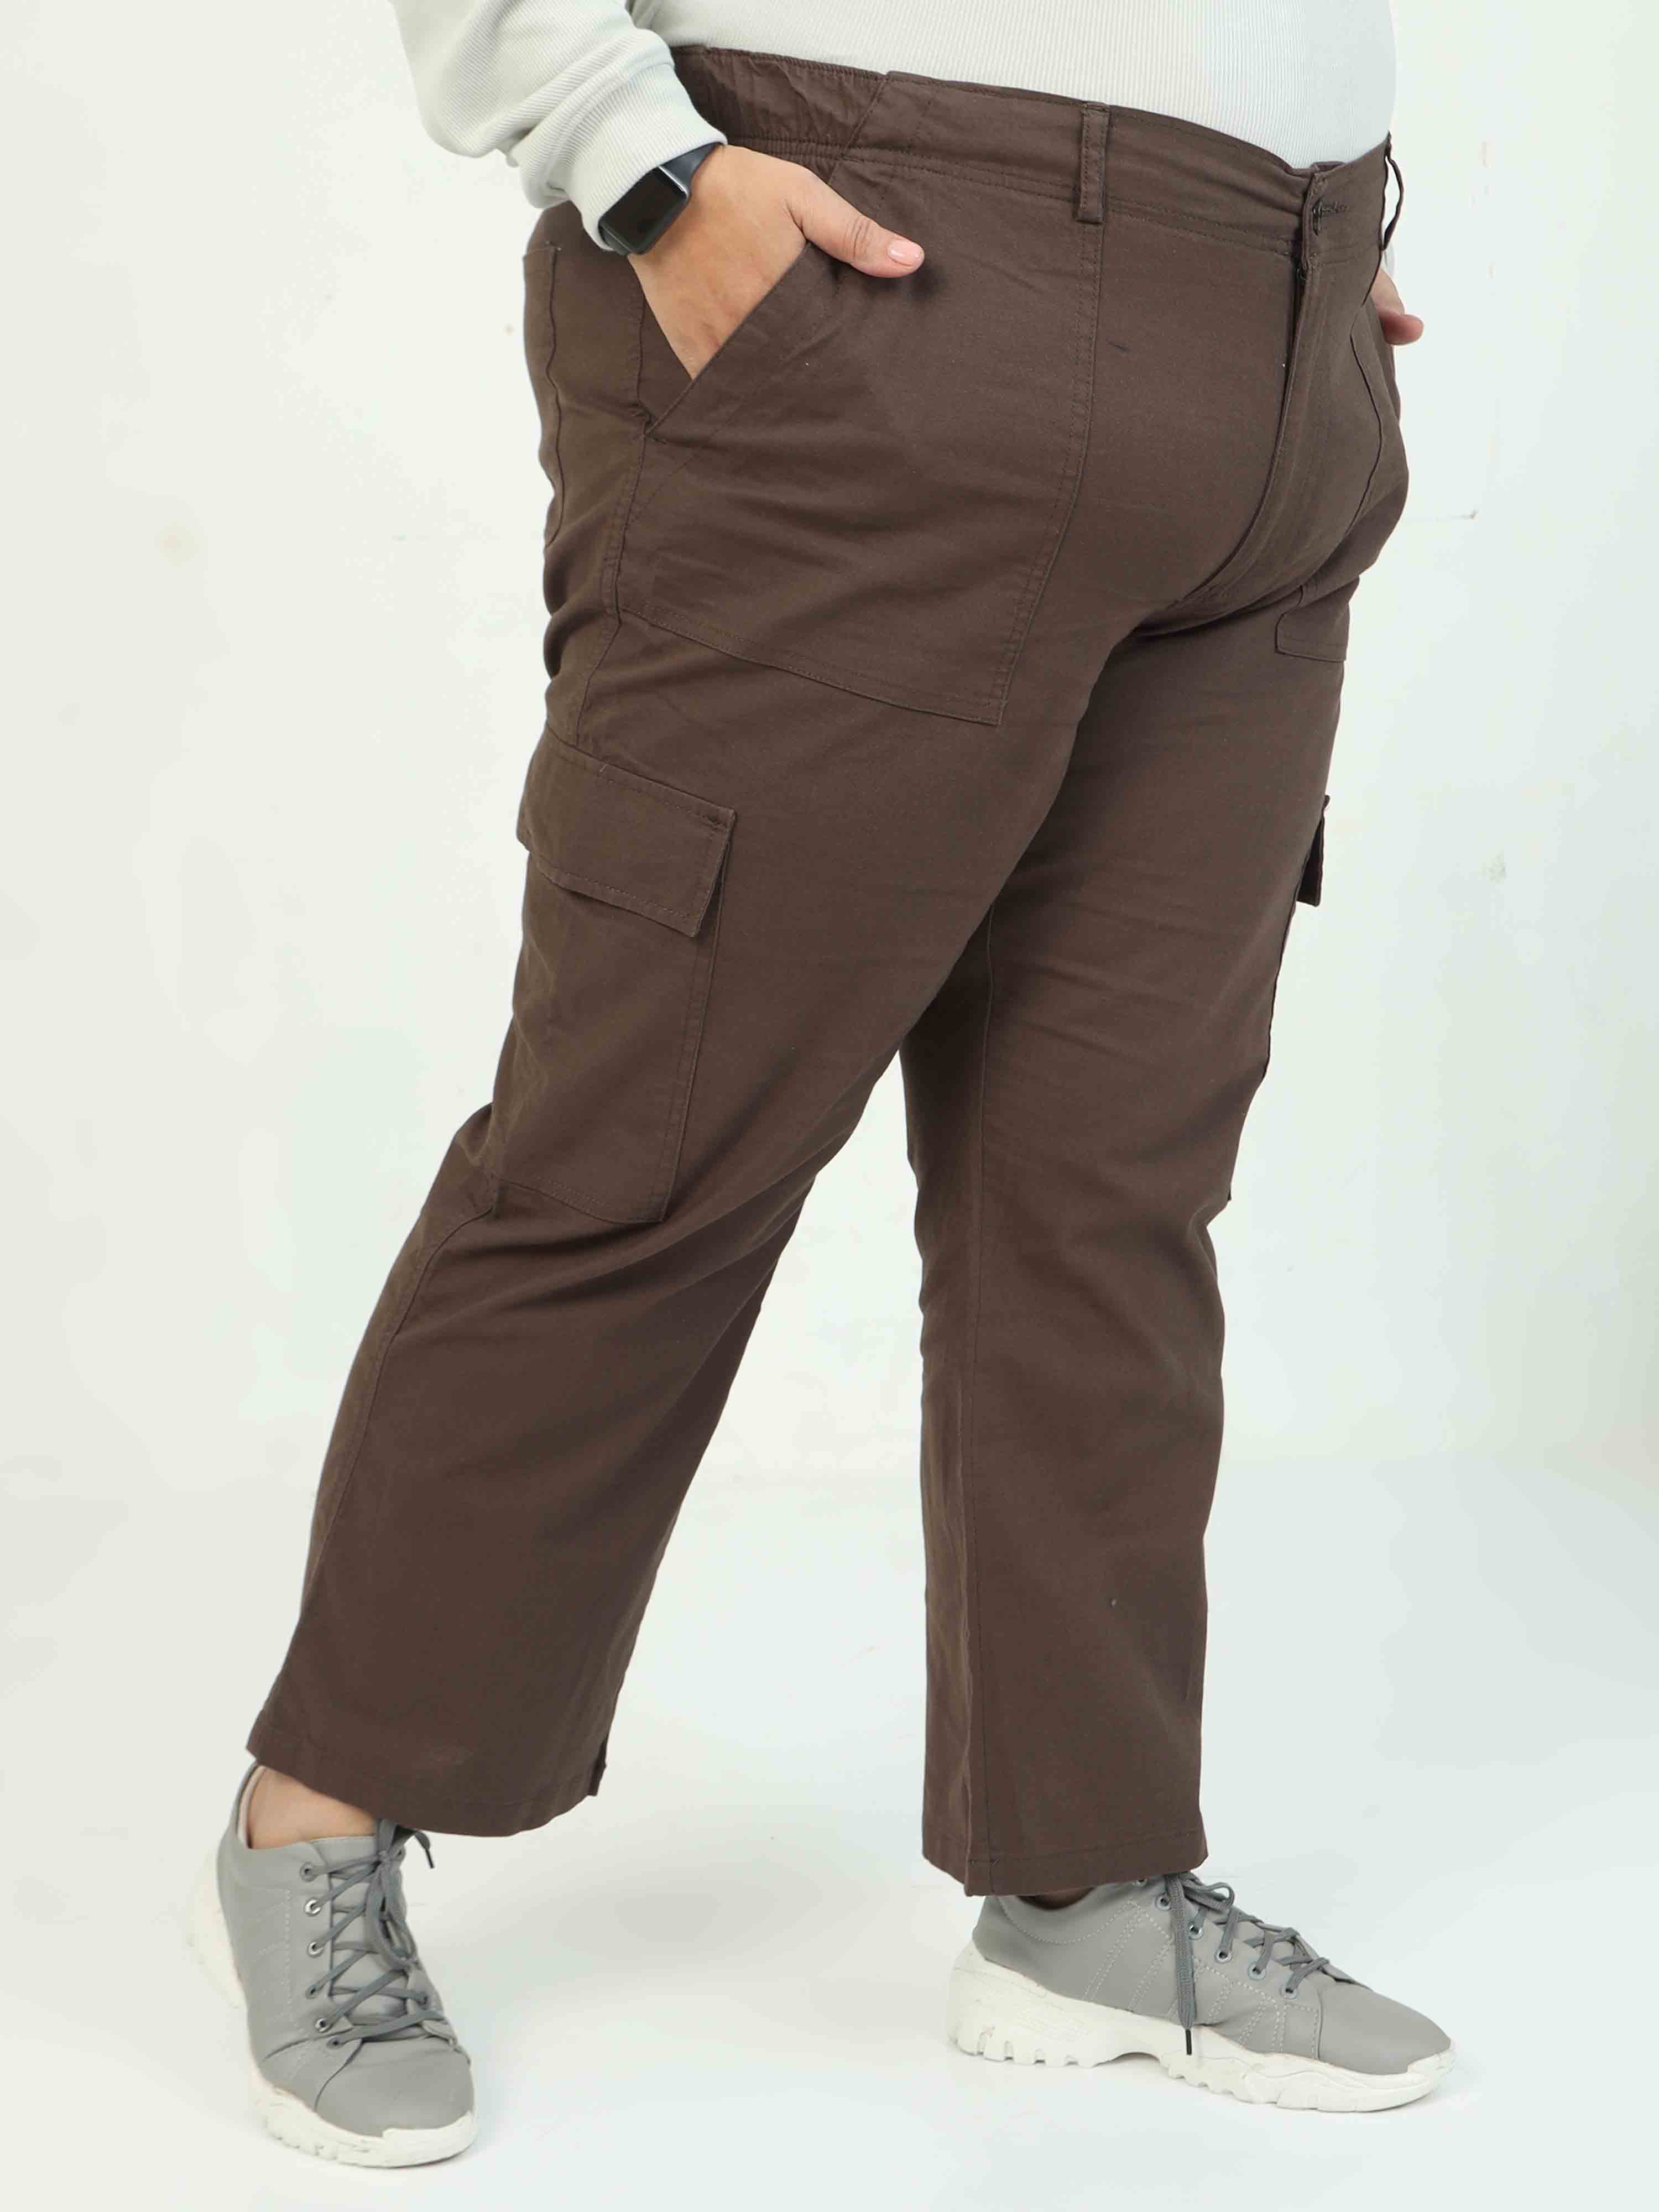 Parachute pant - Khaki Parachute Pants 2.0 for Womens - pant